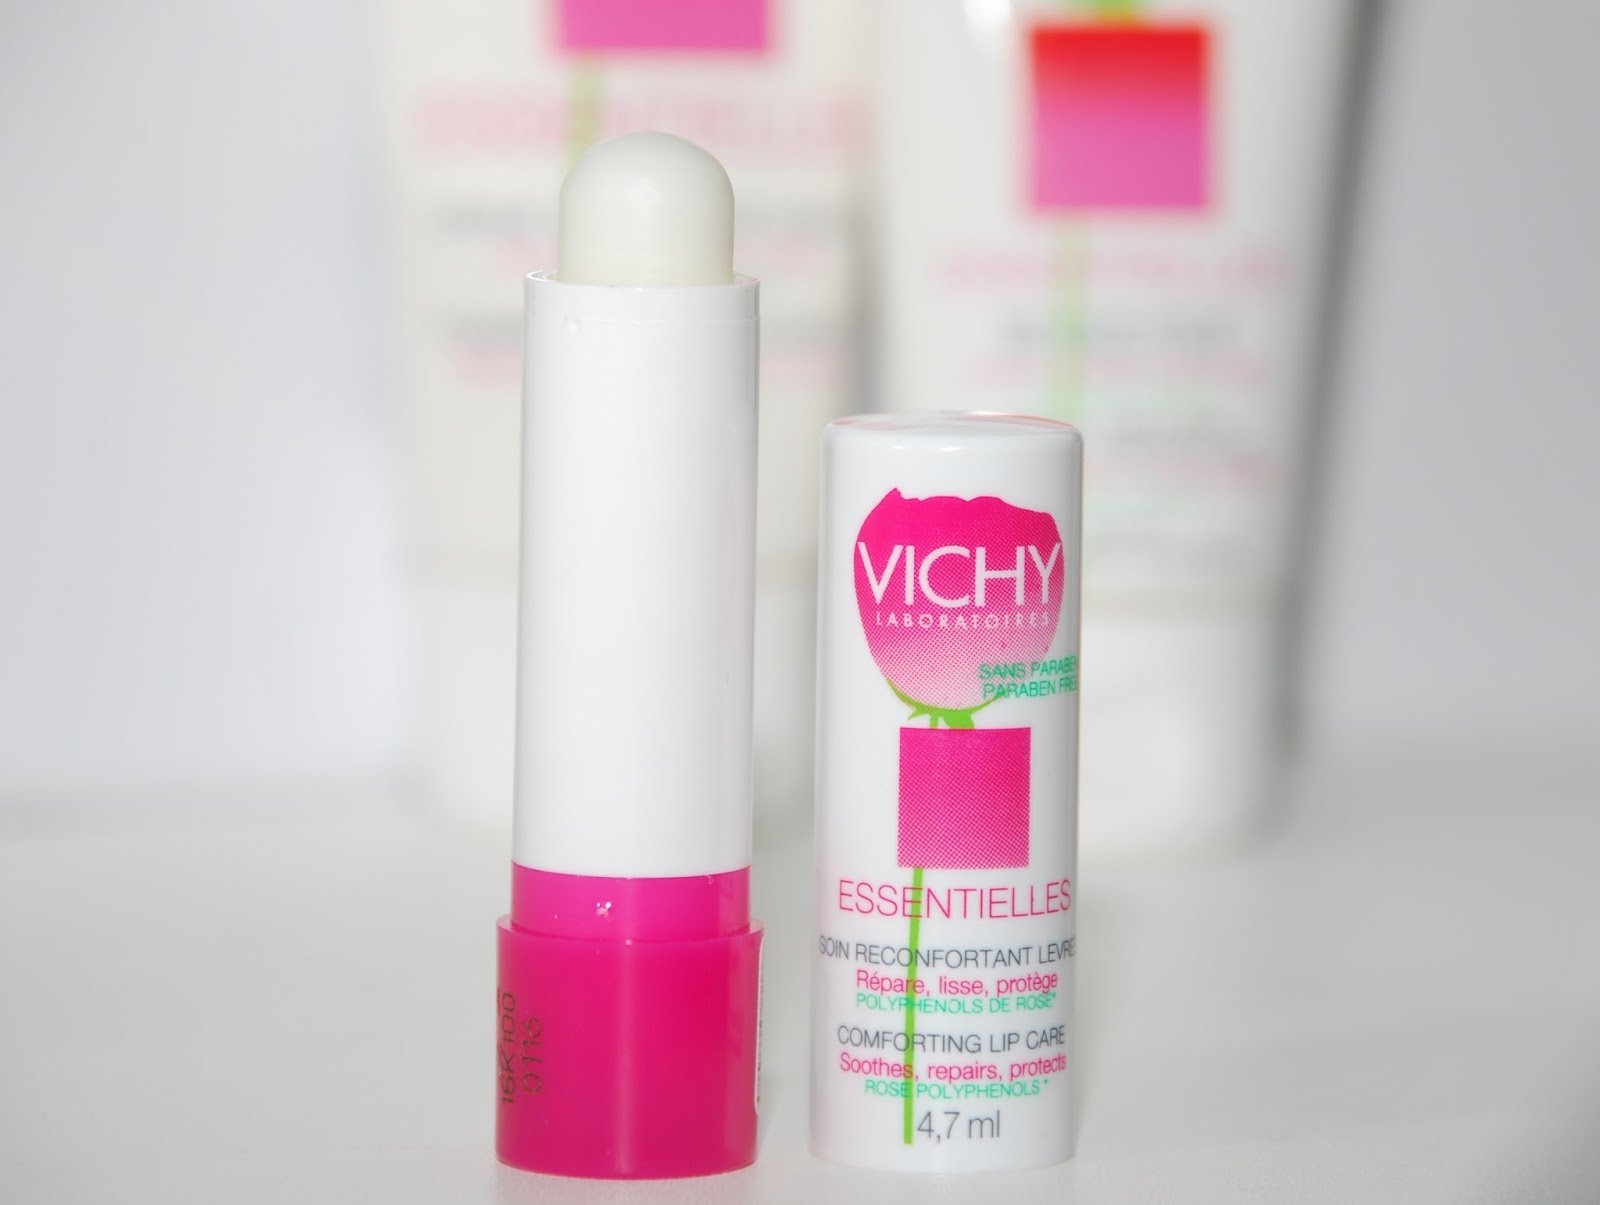 Veraanda beauty: vichy essentielles comforting lip care - ухаживающий бальзам для губ.